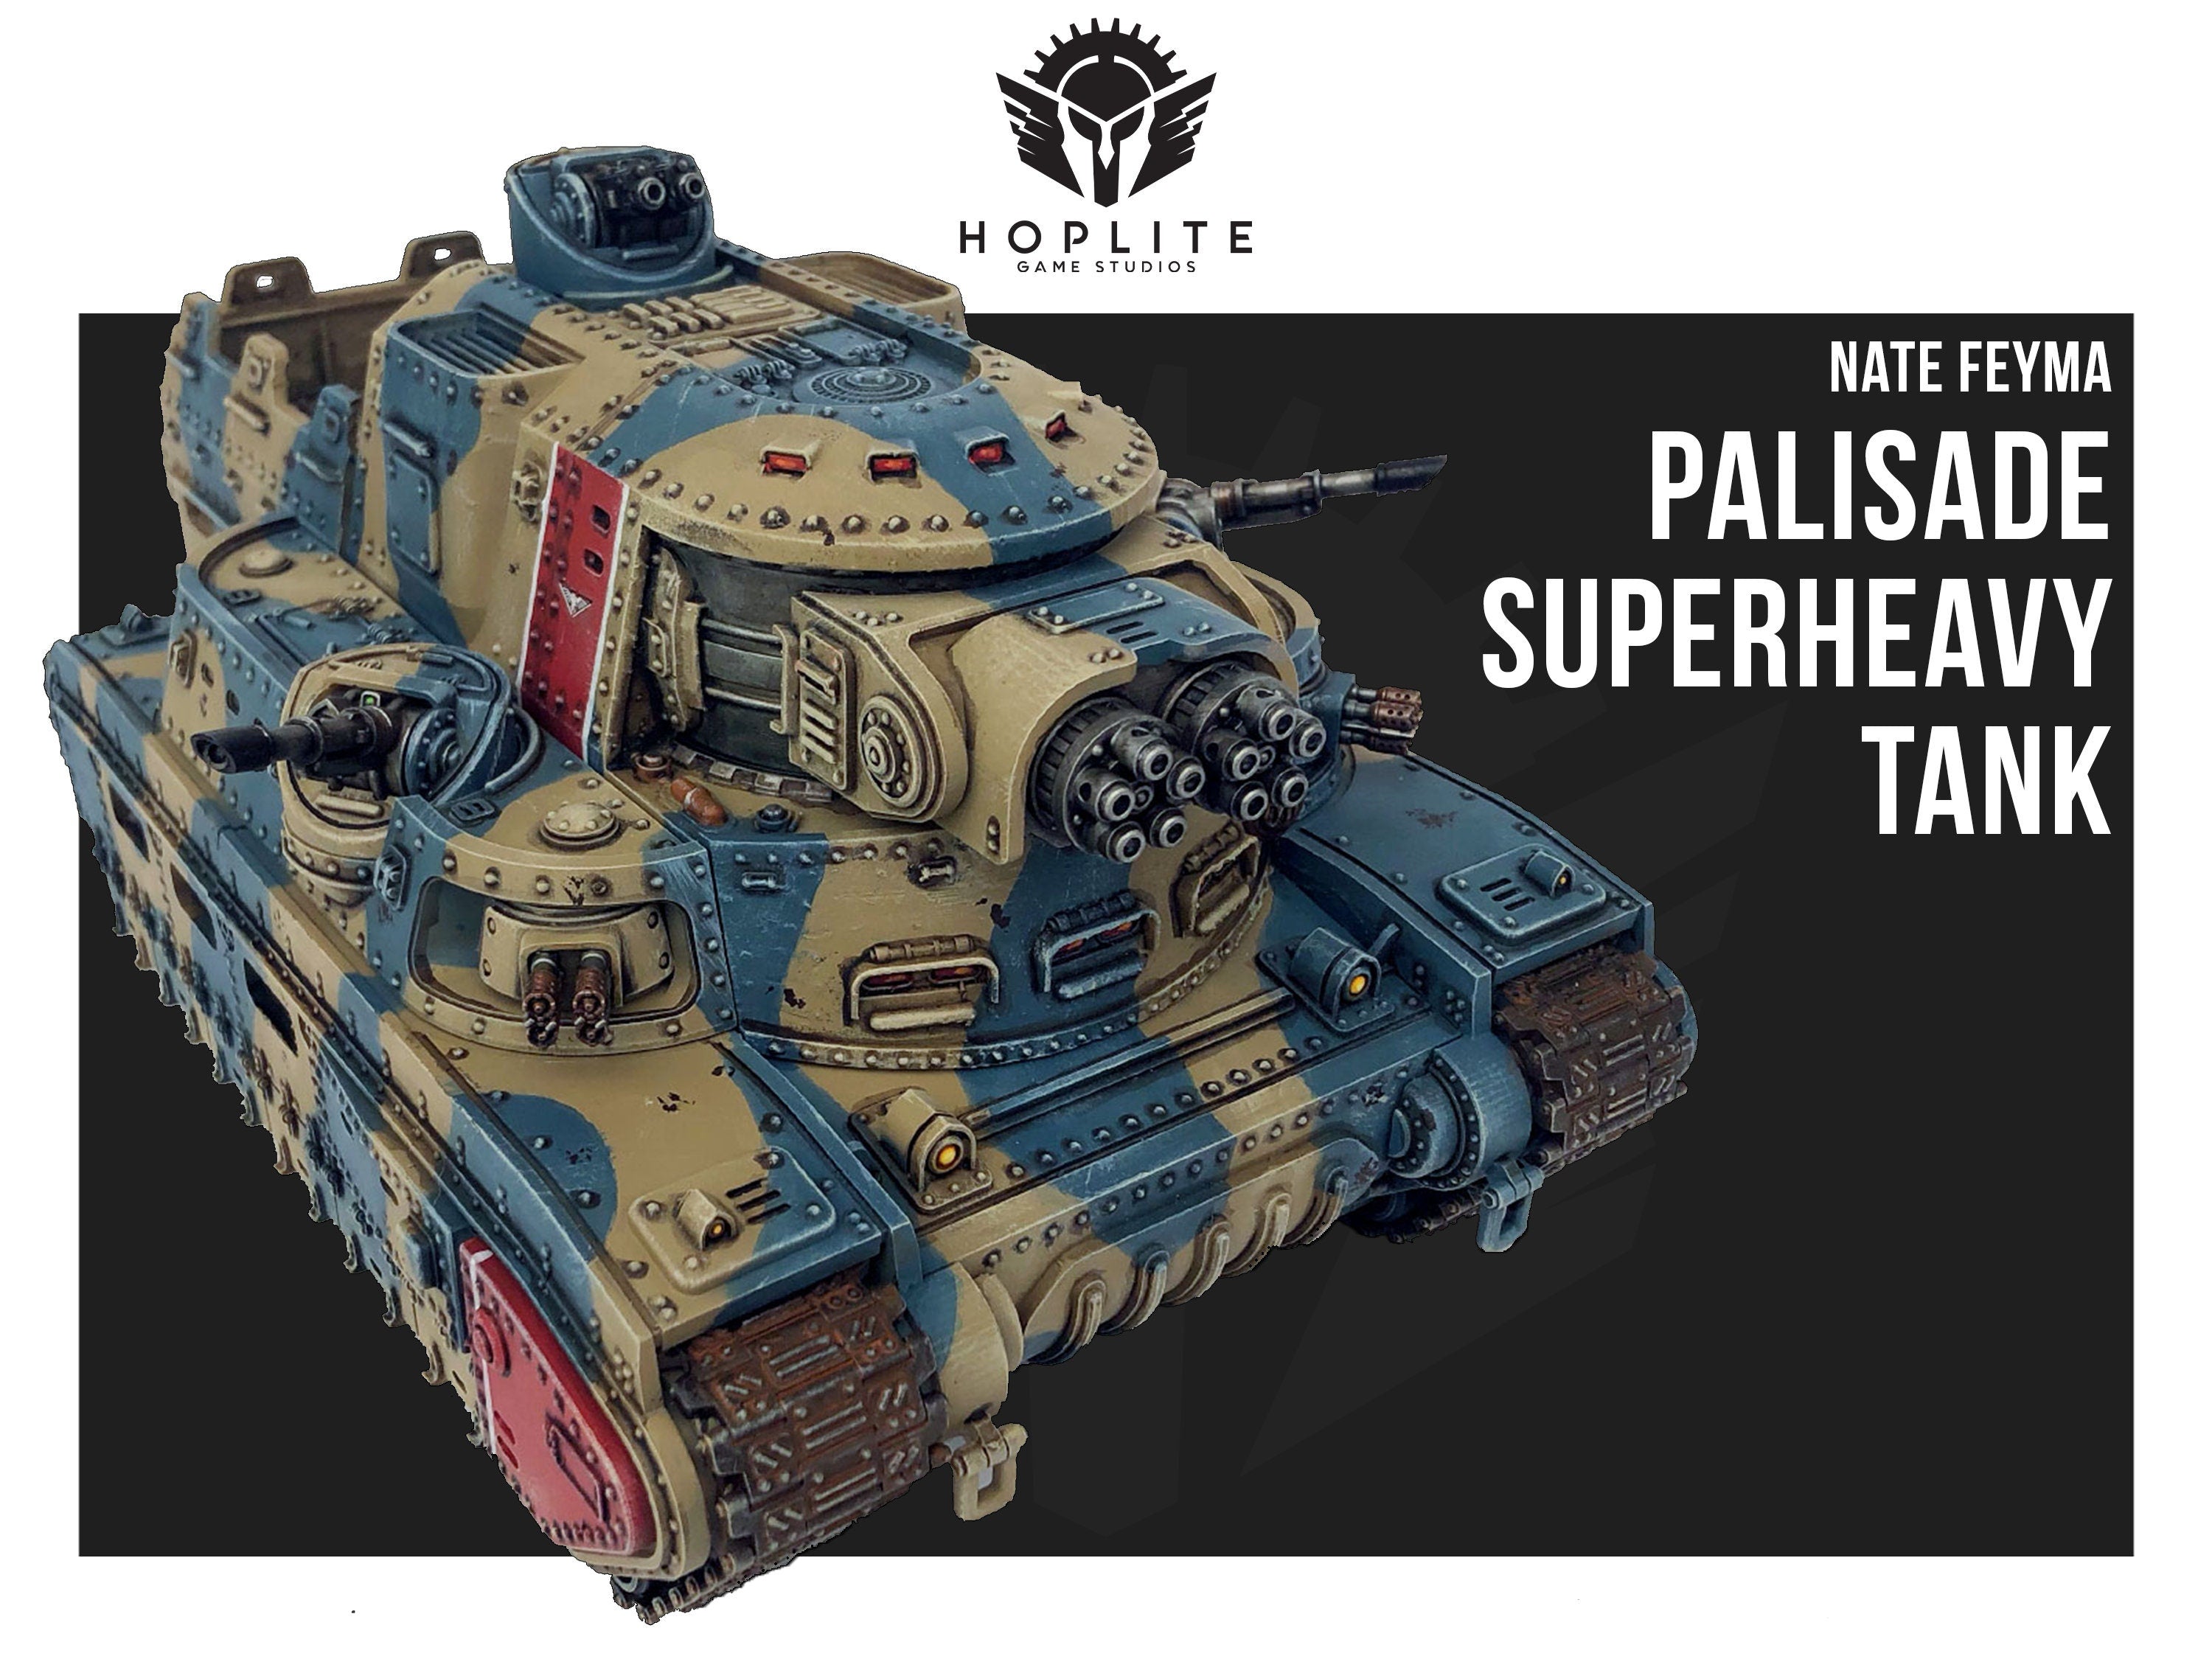 The Palisade Superheavy Battle Tank